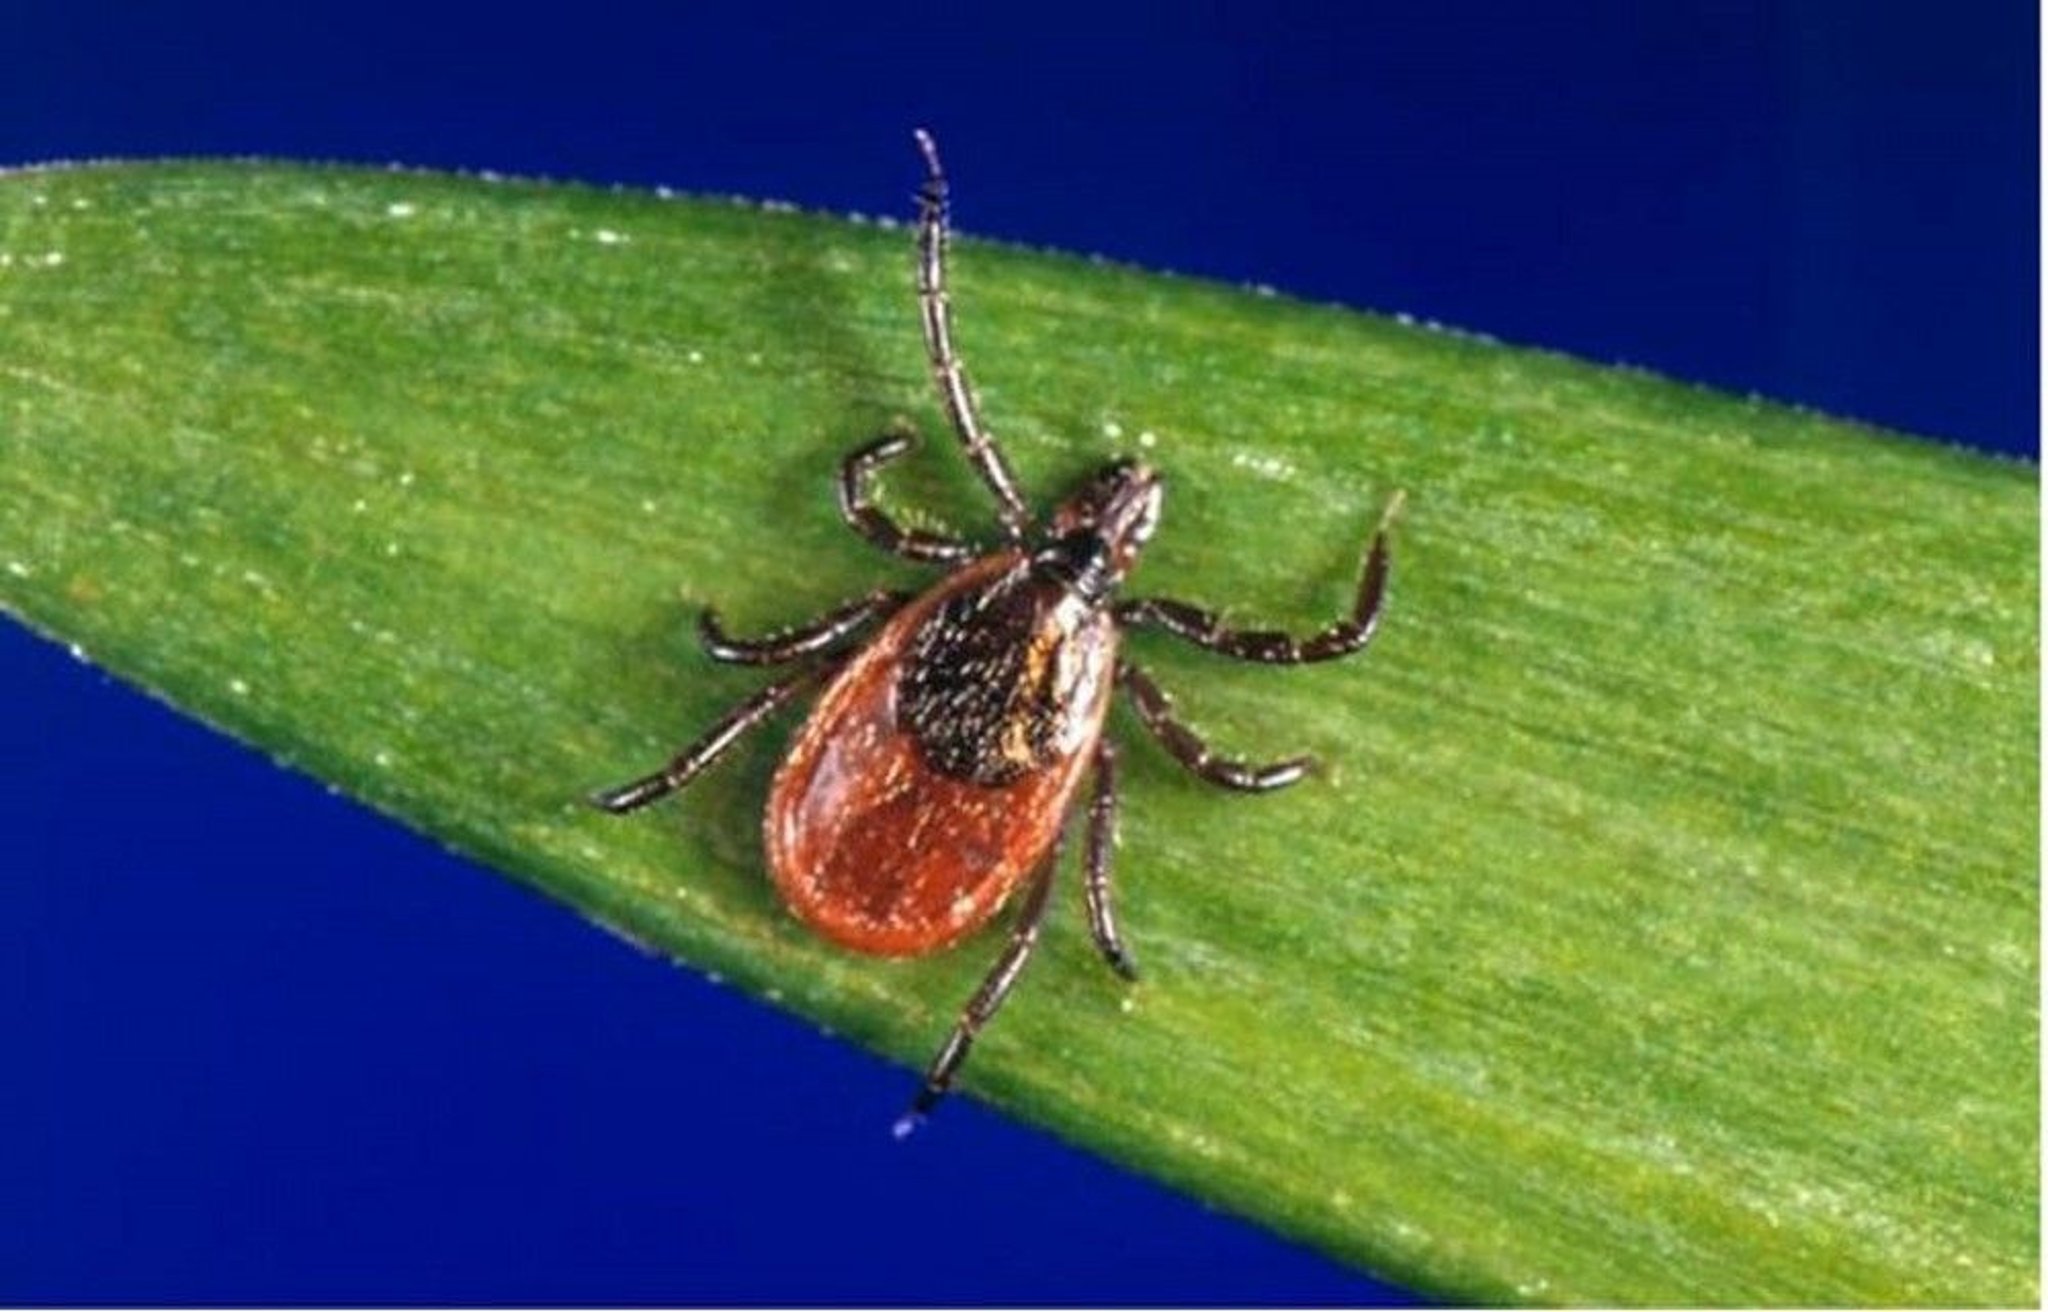 Ixodes scapularis (Lyme Disease)